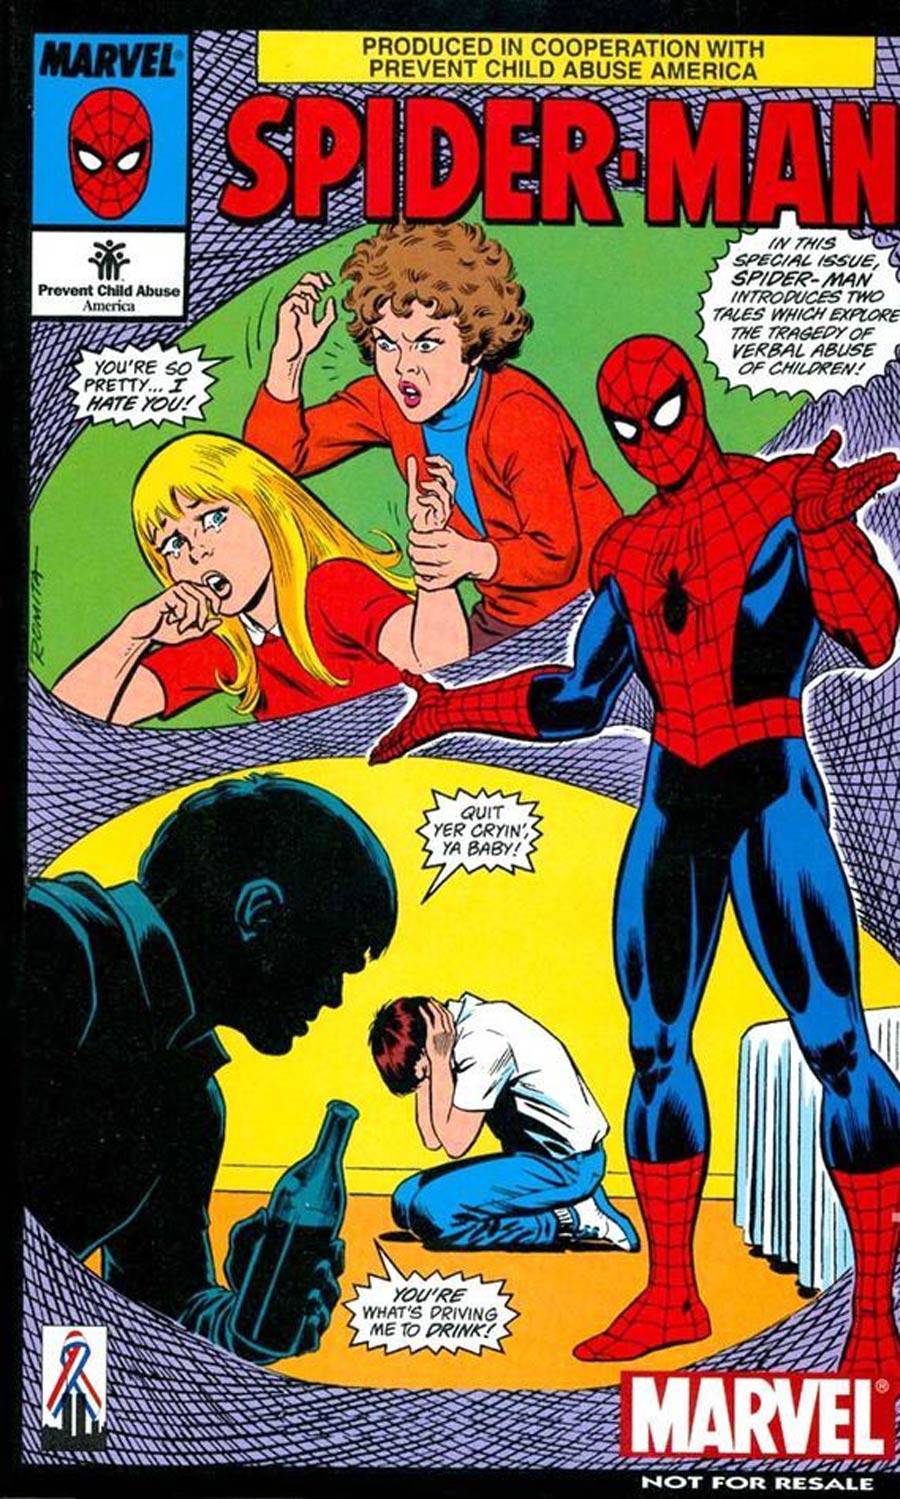 Amazing Spider-Man Prevent Child Abuse 2002 Edition